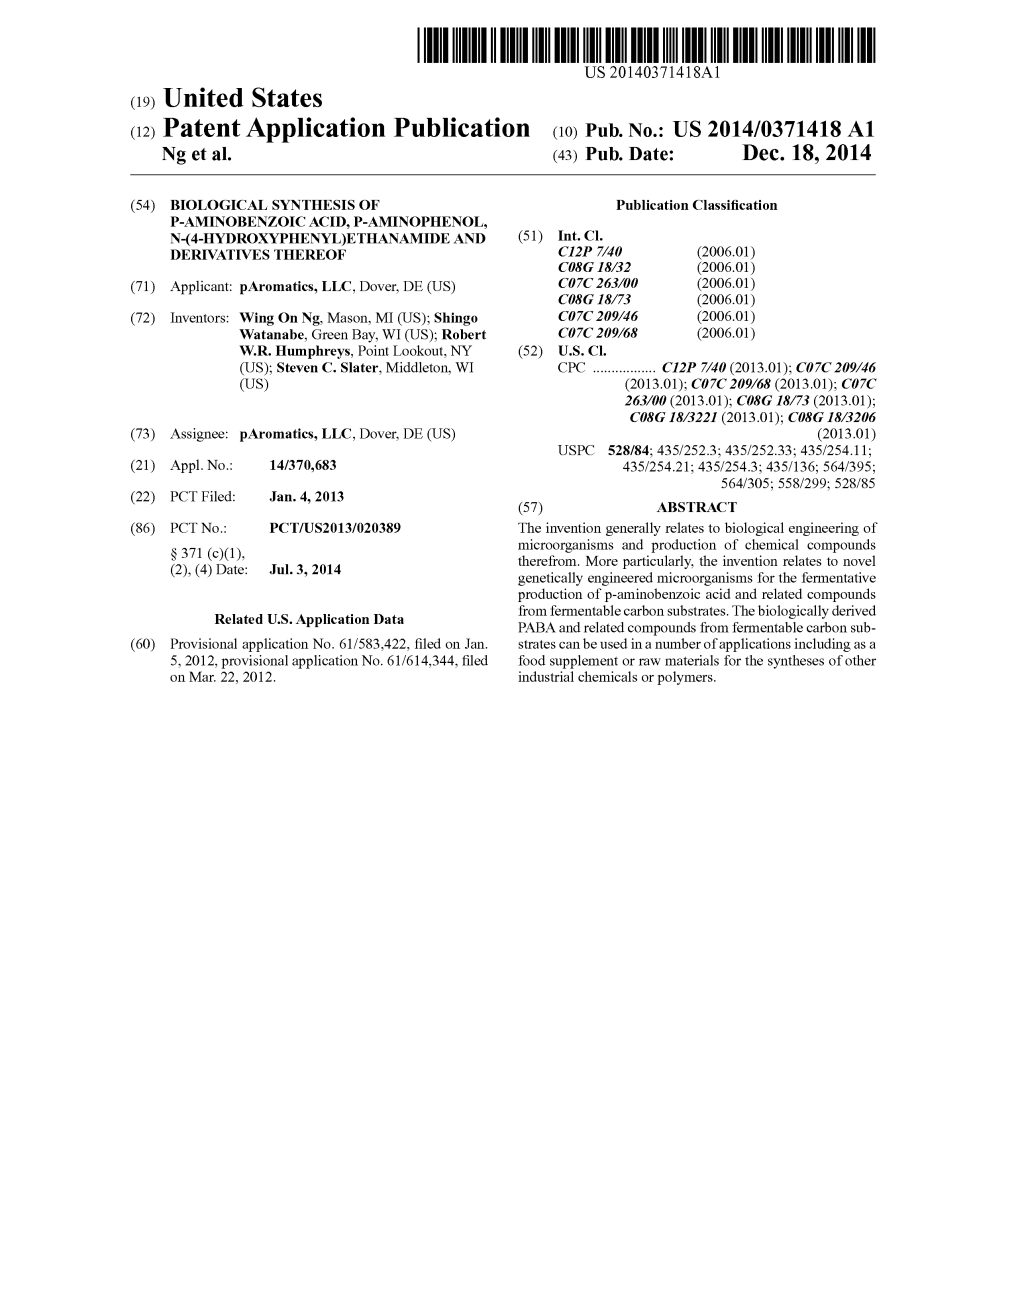 (12) Patent Application Publication (10) Pub. No.: US 2014/0371418 A1 Ng Et Al